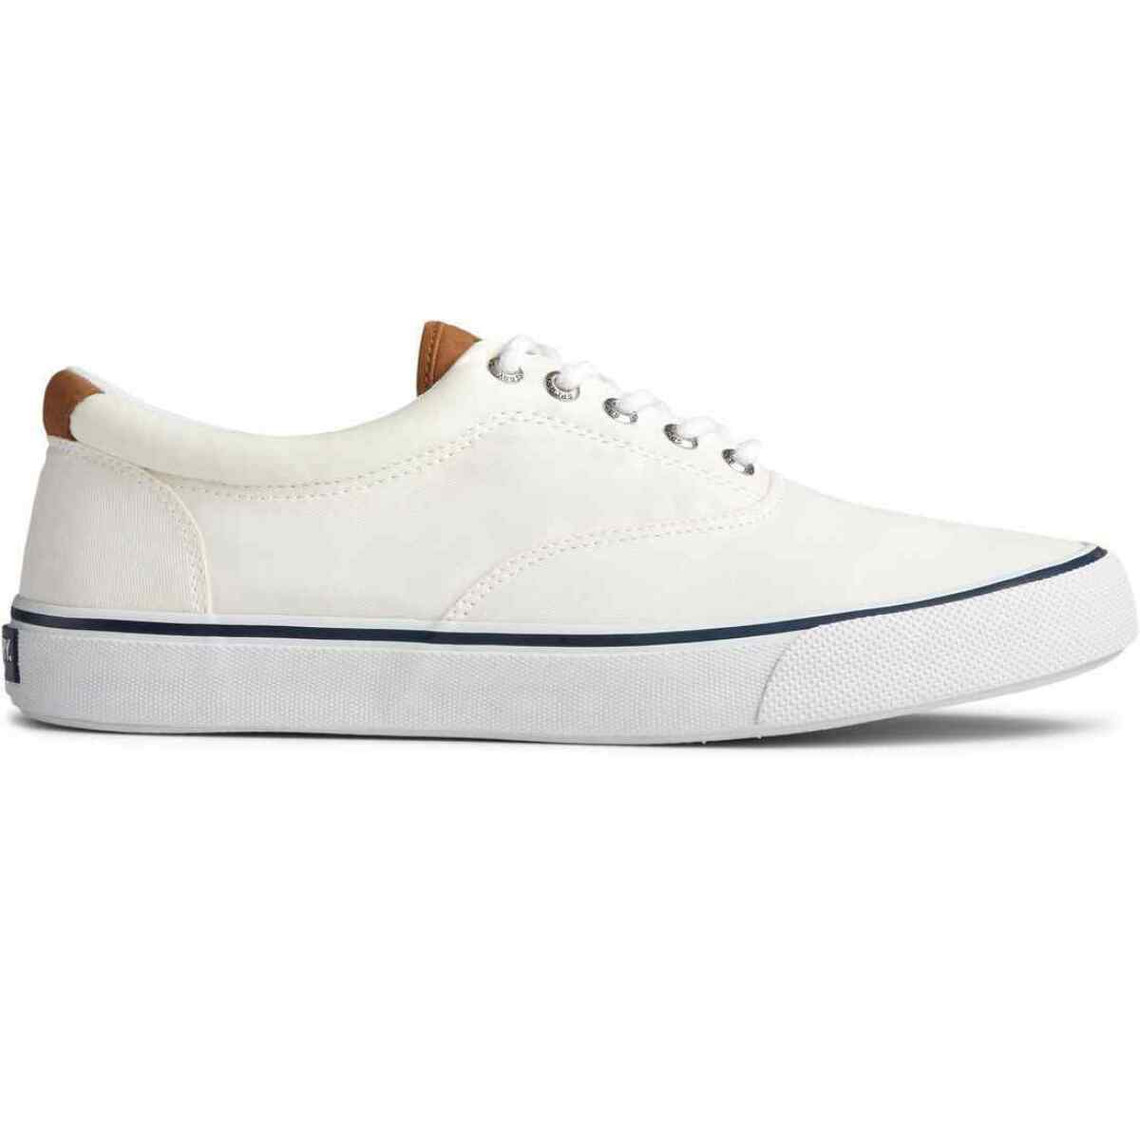 Chaussures Vulcanisée Pour Homme STRIPER II CVO - Coton blanc